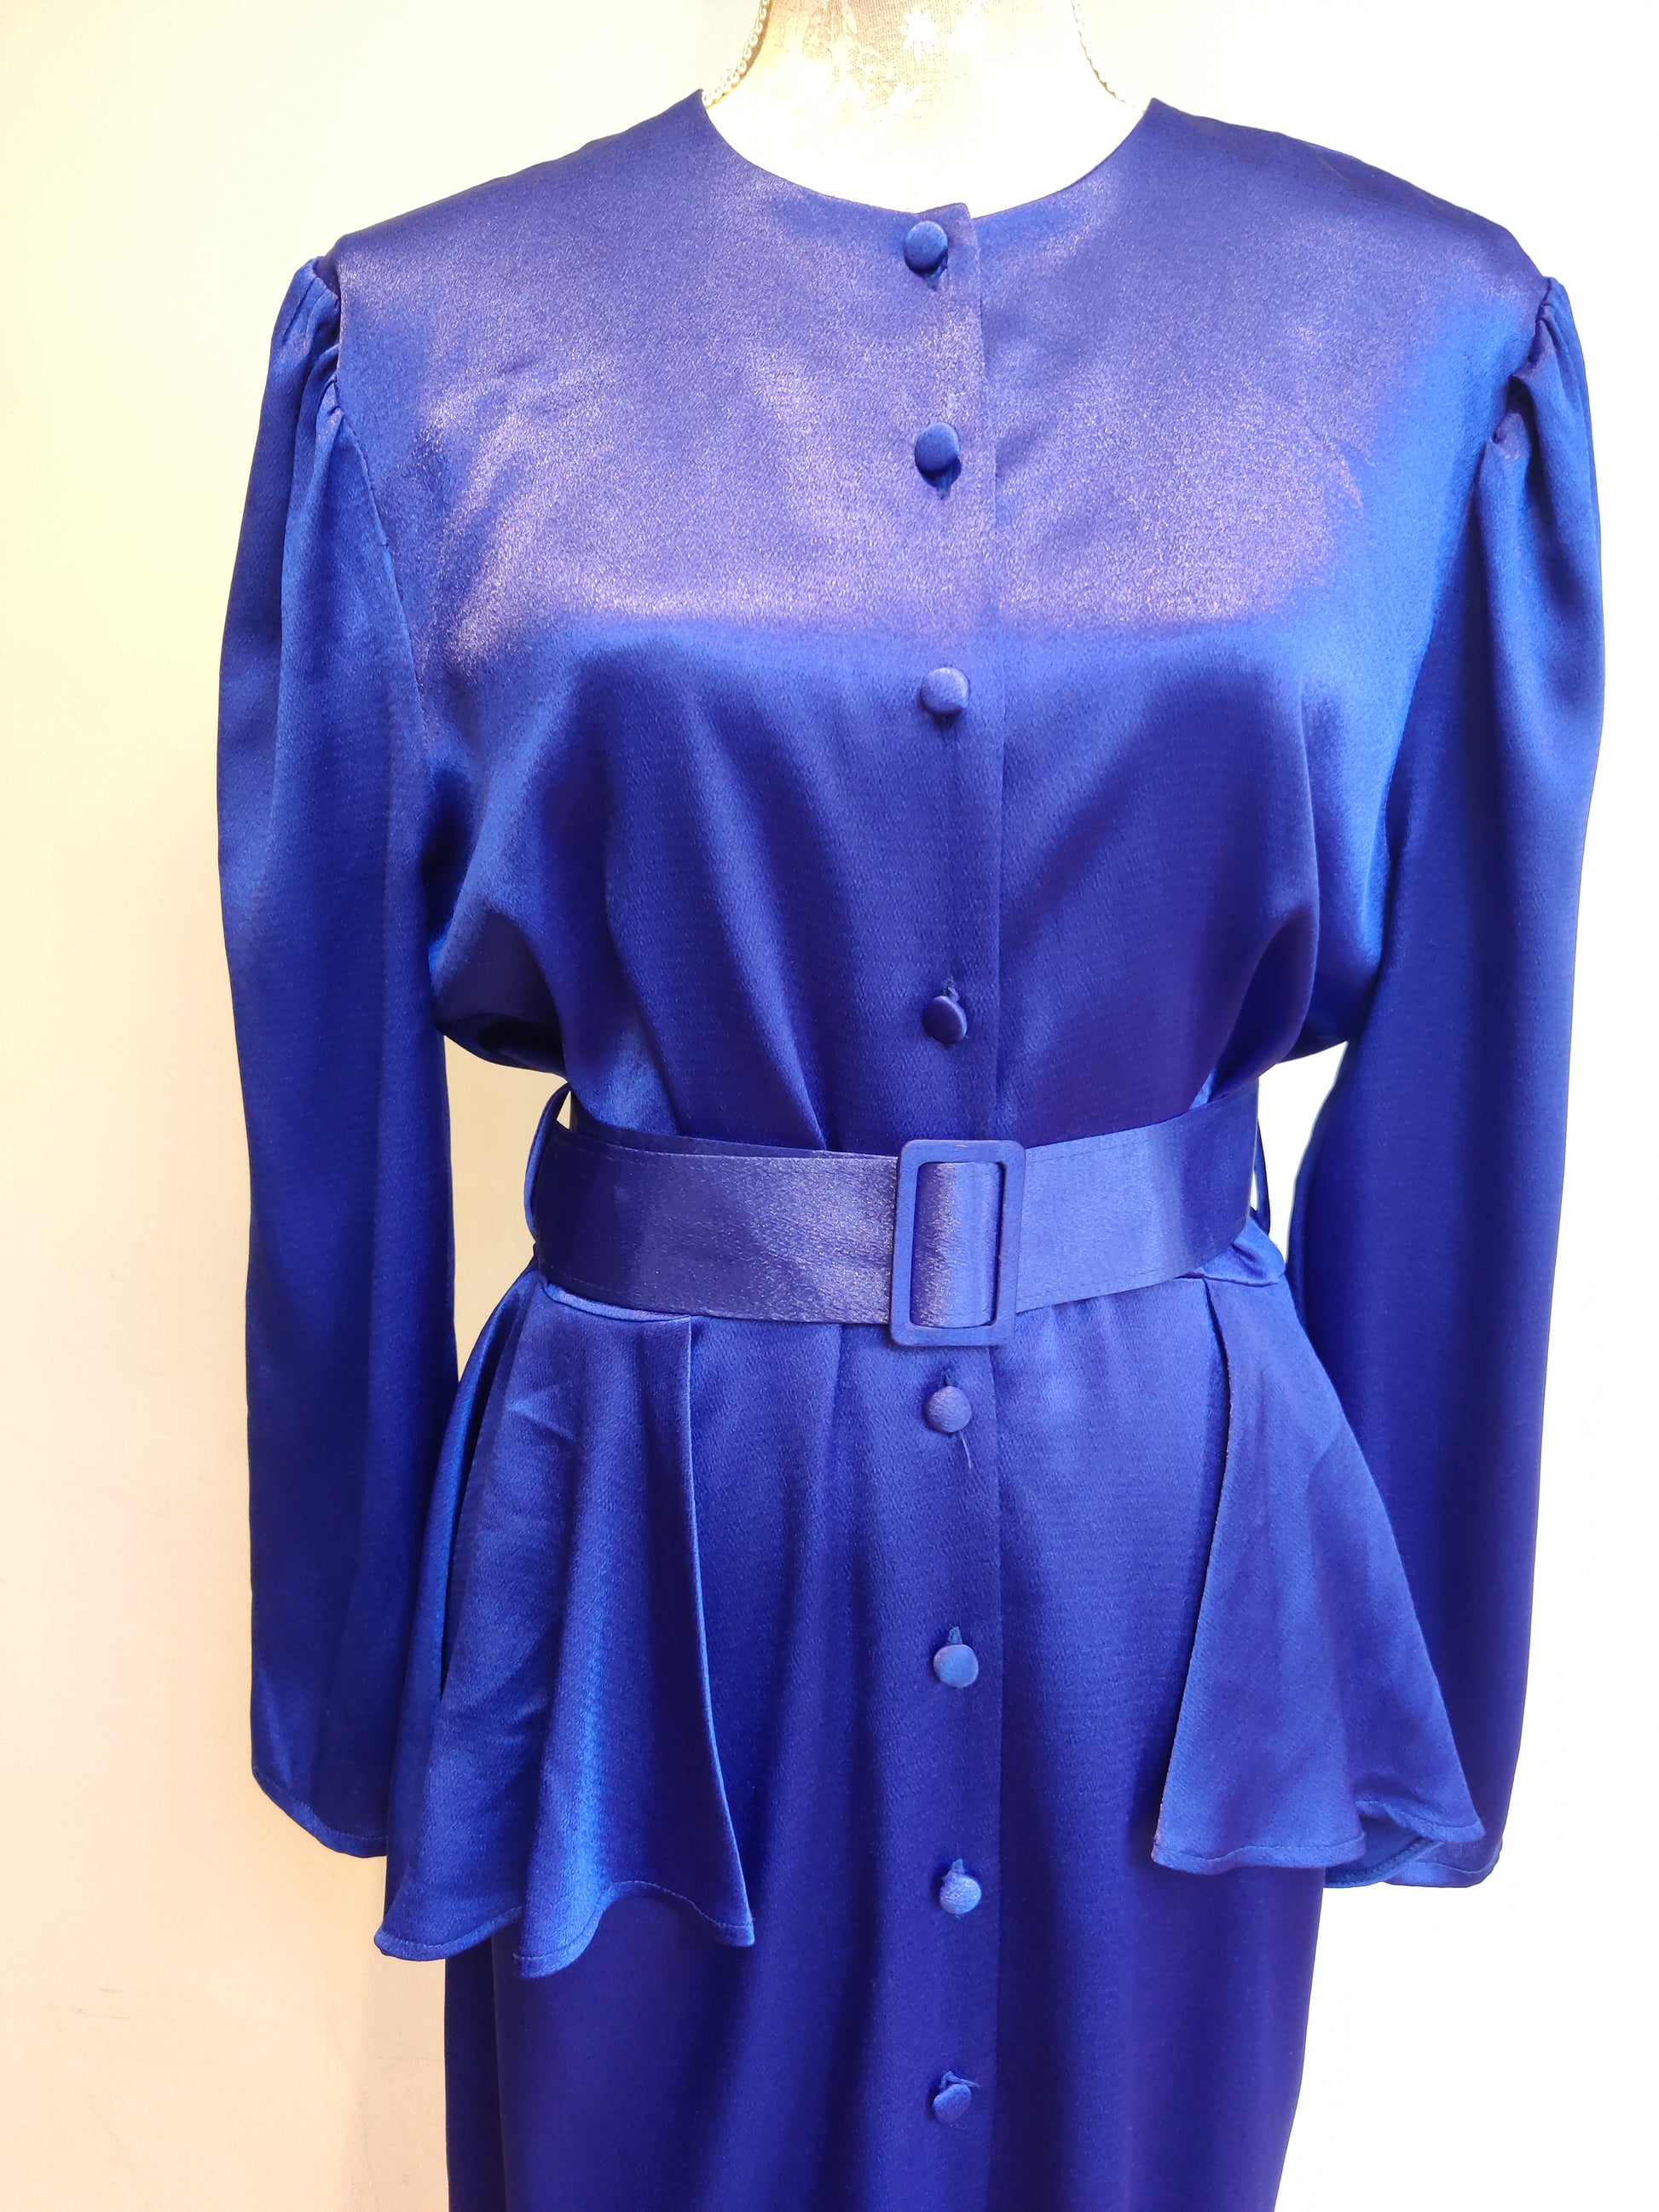 Incredible vintage blue peplum dress.